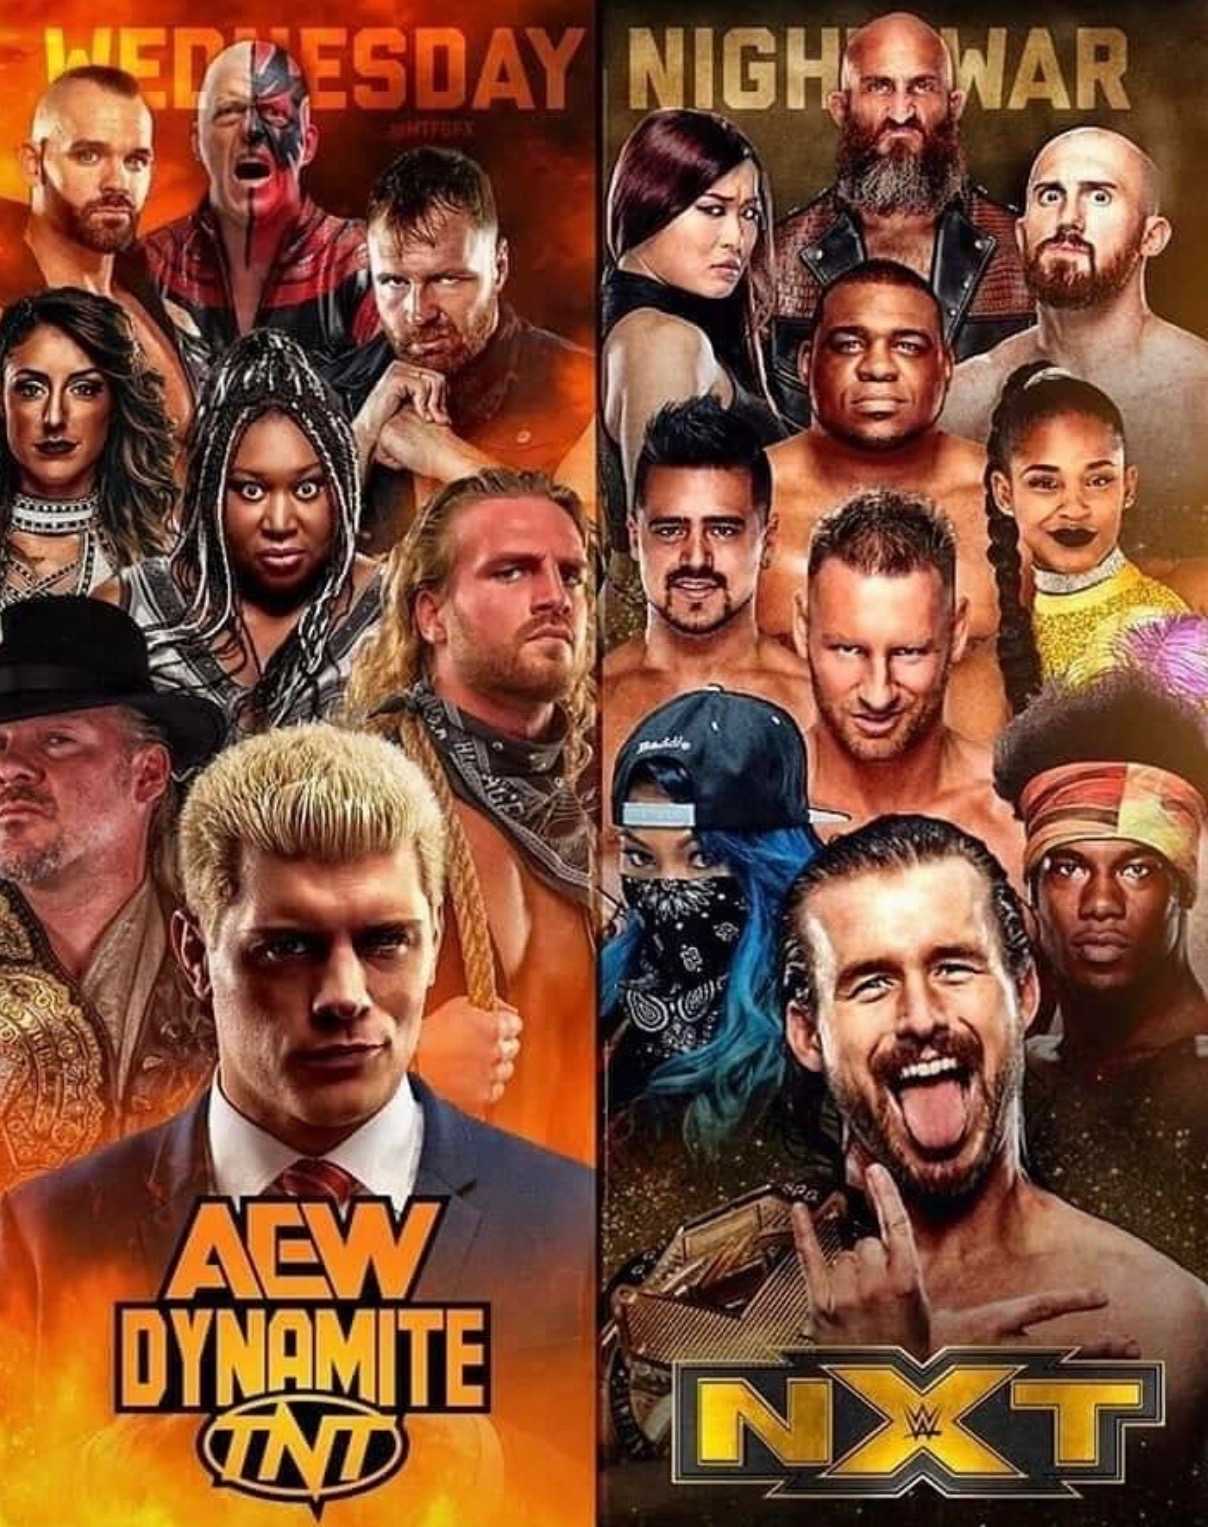  Let The Games Begin: AEW Dynamite & WWE NXT Bring Back Unpredictability On Wednesday Night